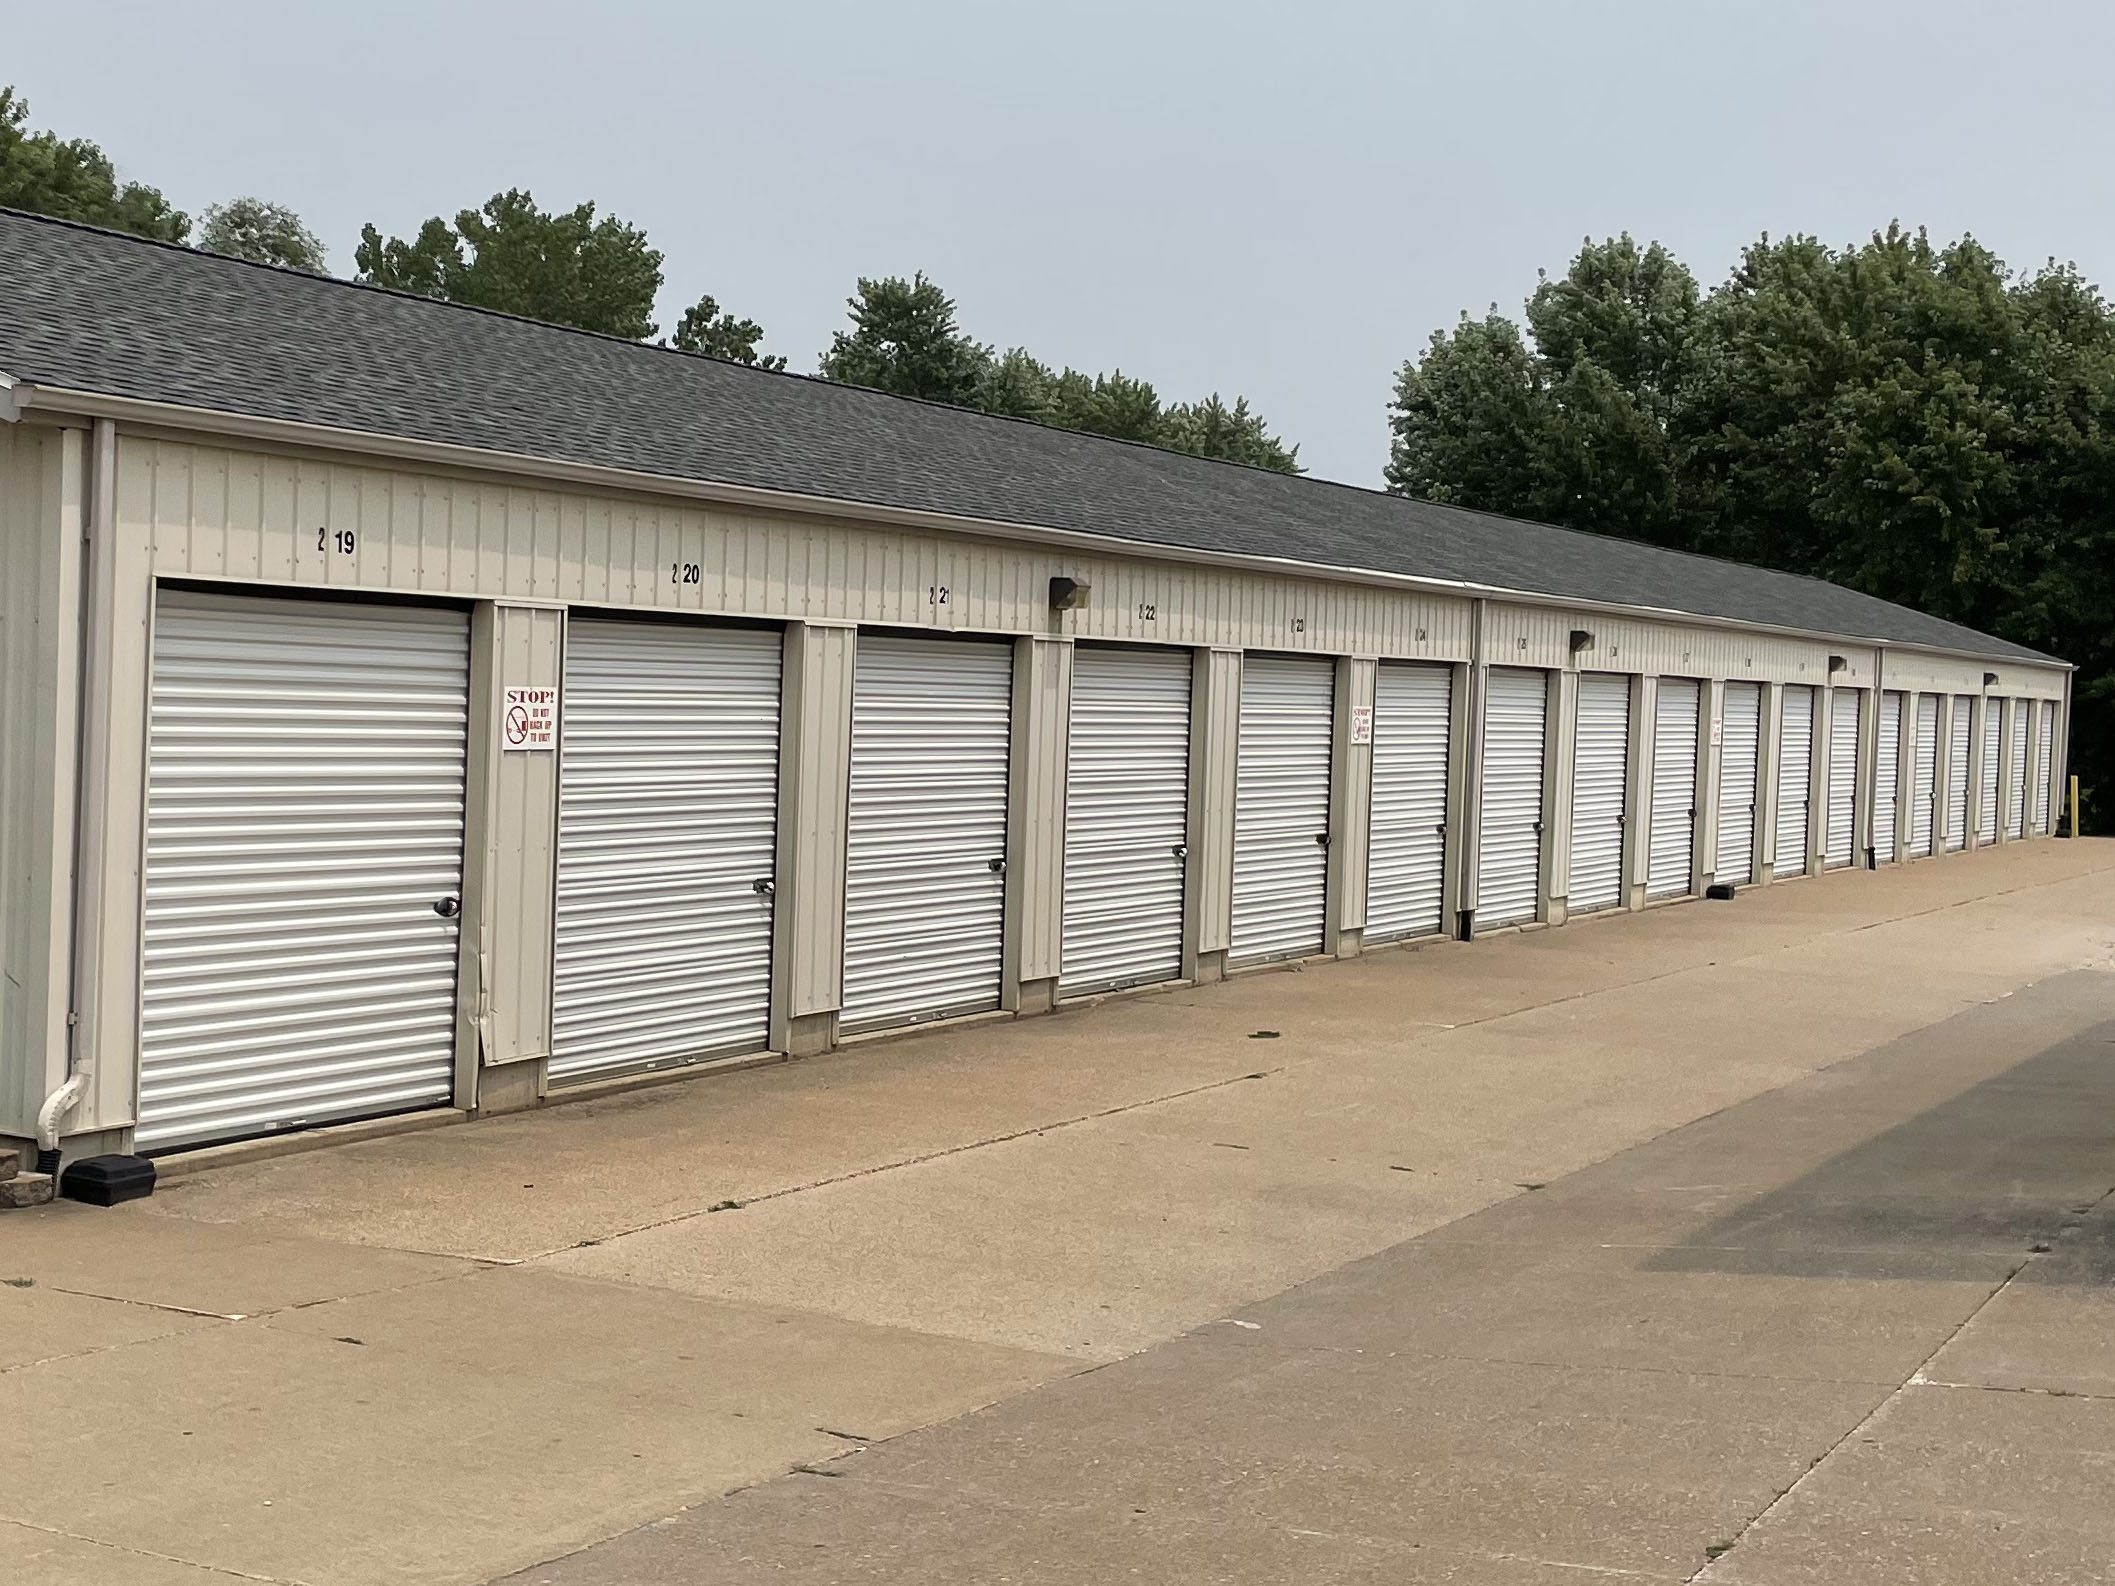 Row of drive-up self-storage units in Davenport, Iowa